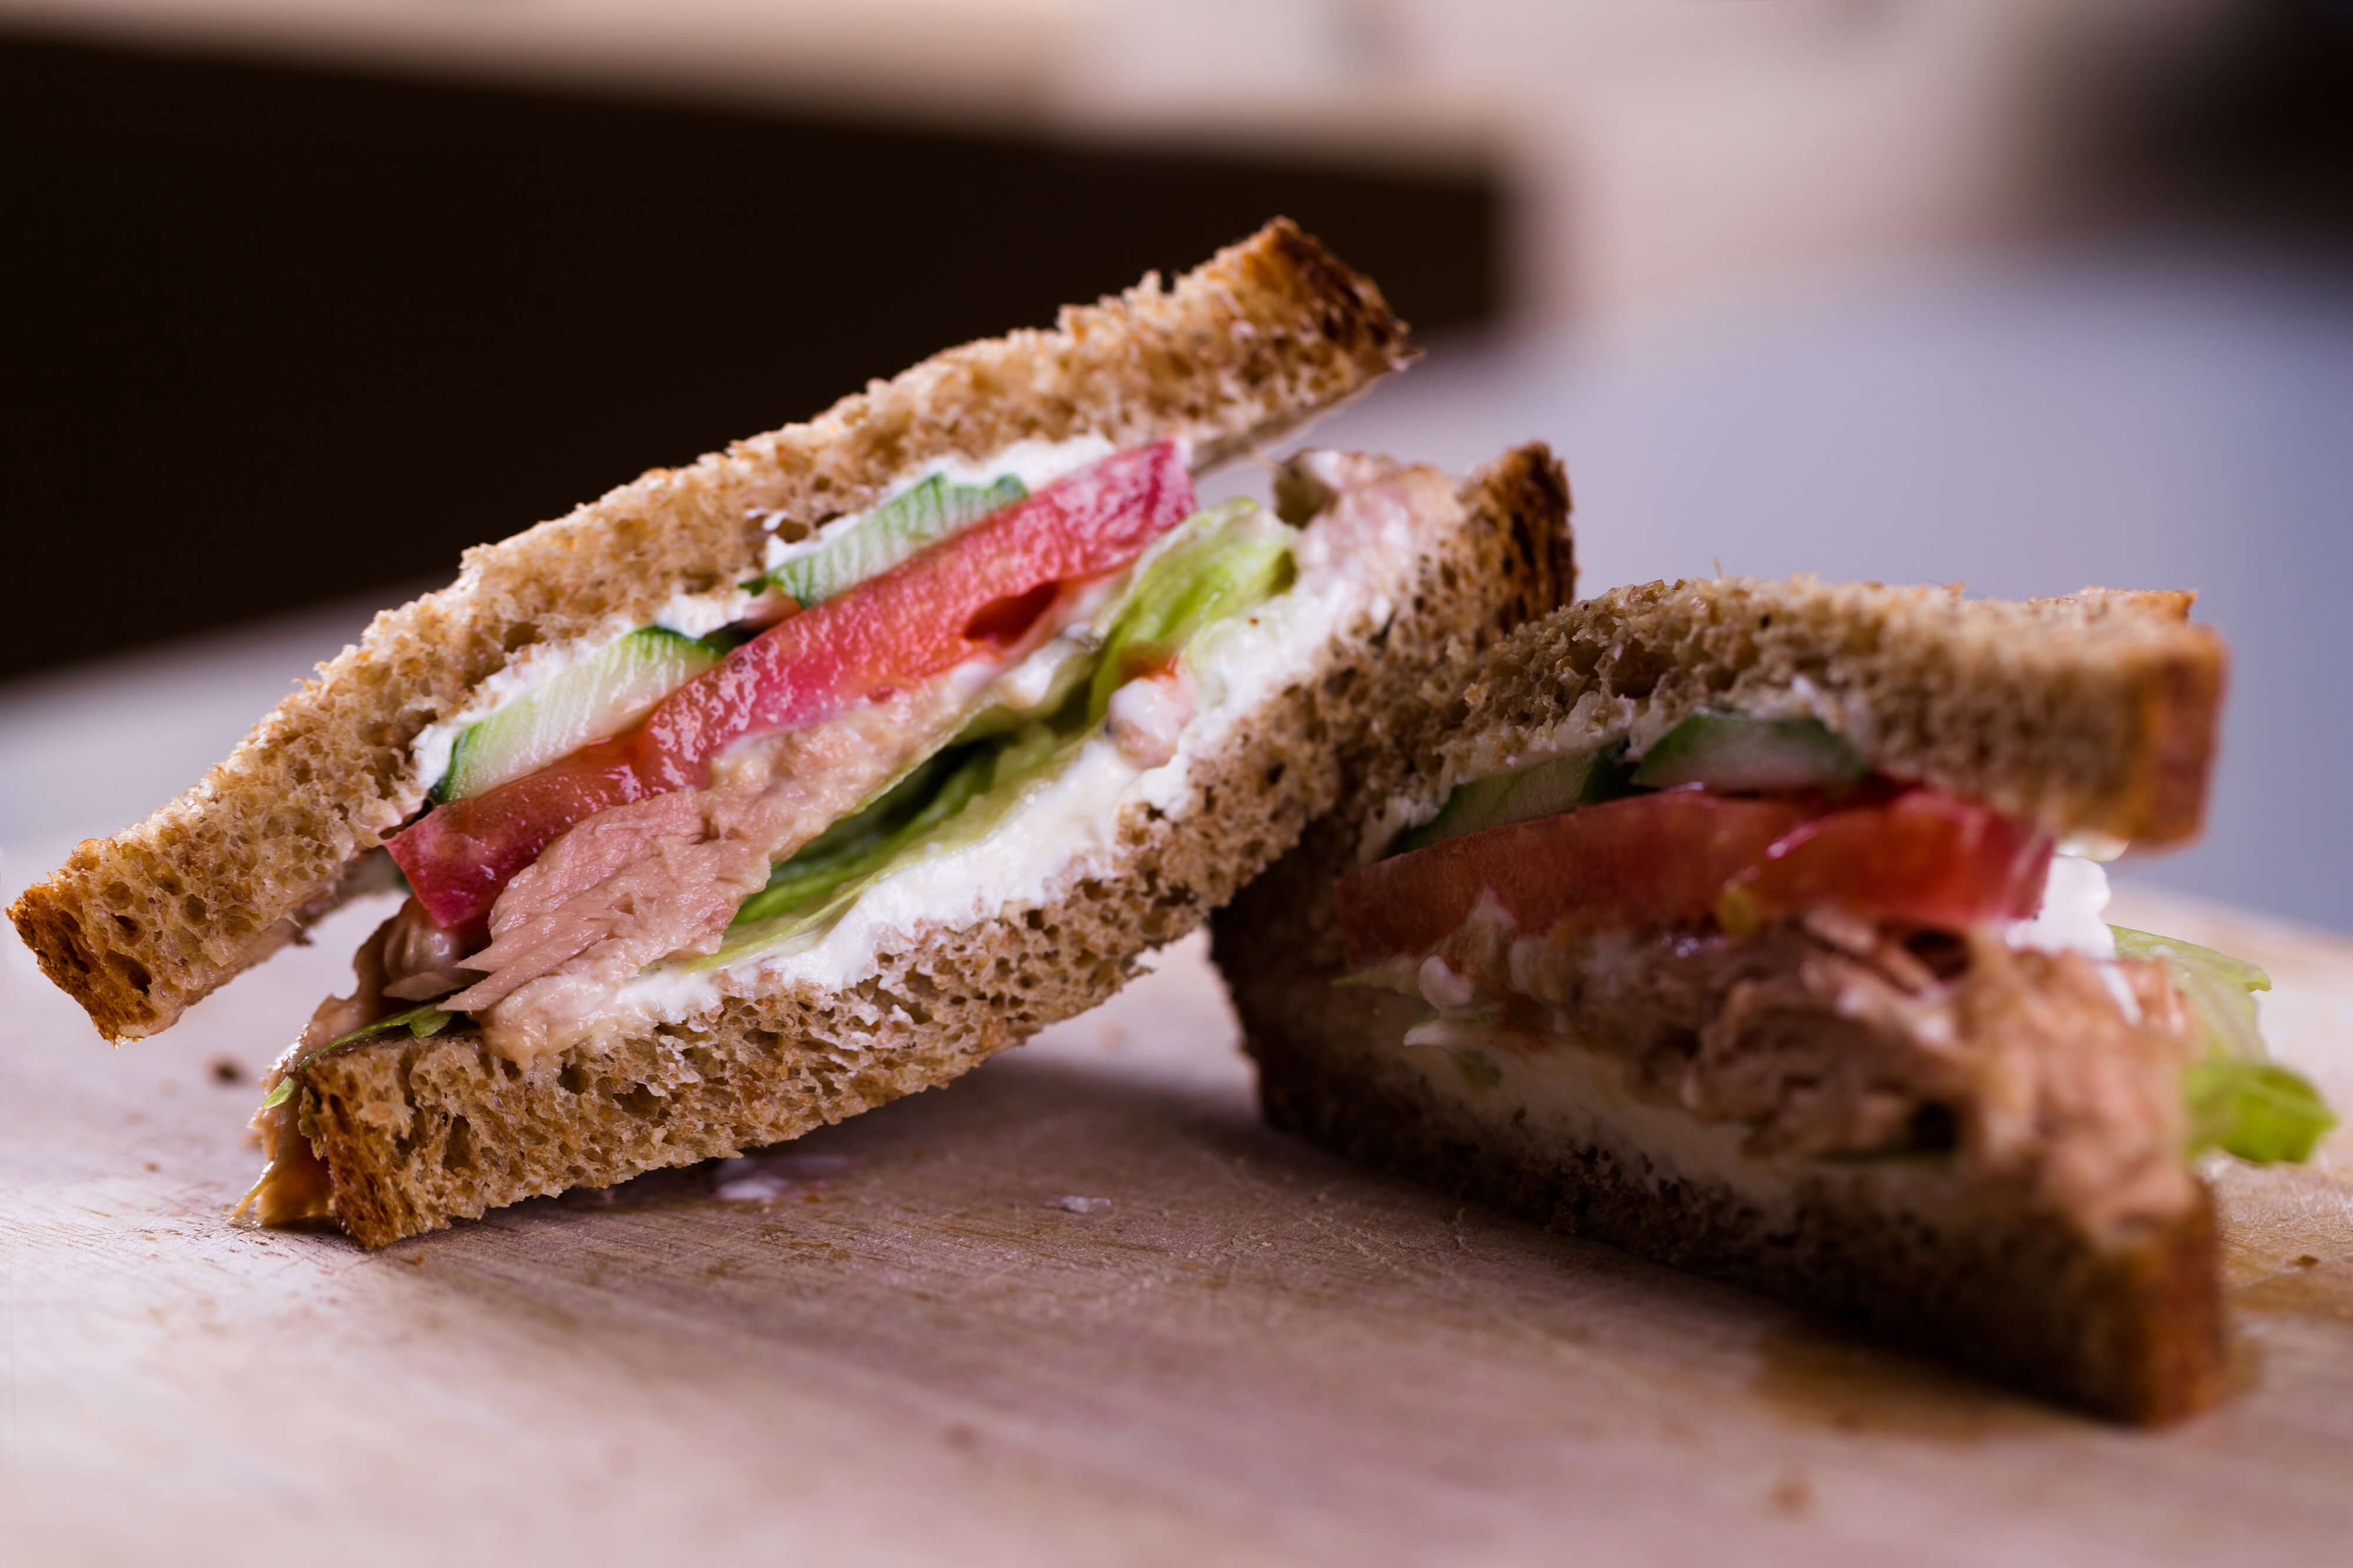 A different take on tuna nicoise, Martha Stewart turns this salad favorite into a sandwich,